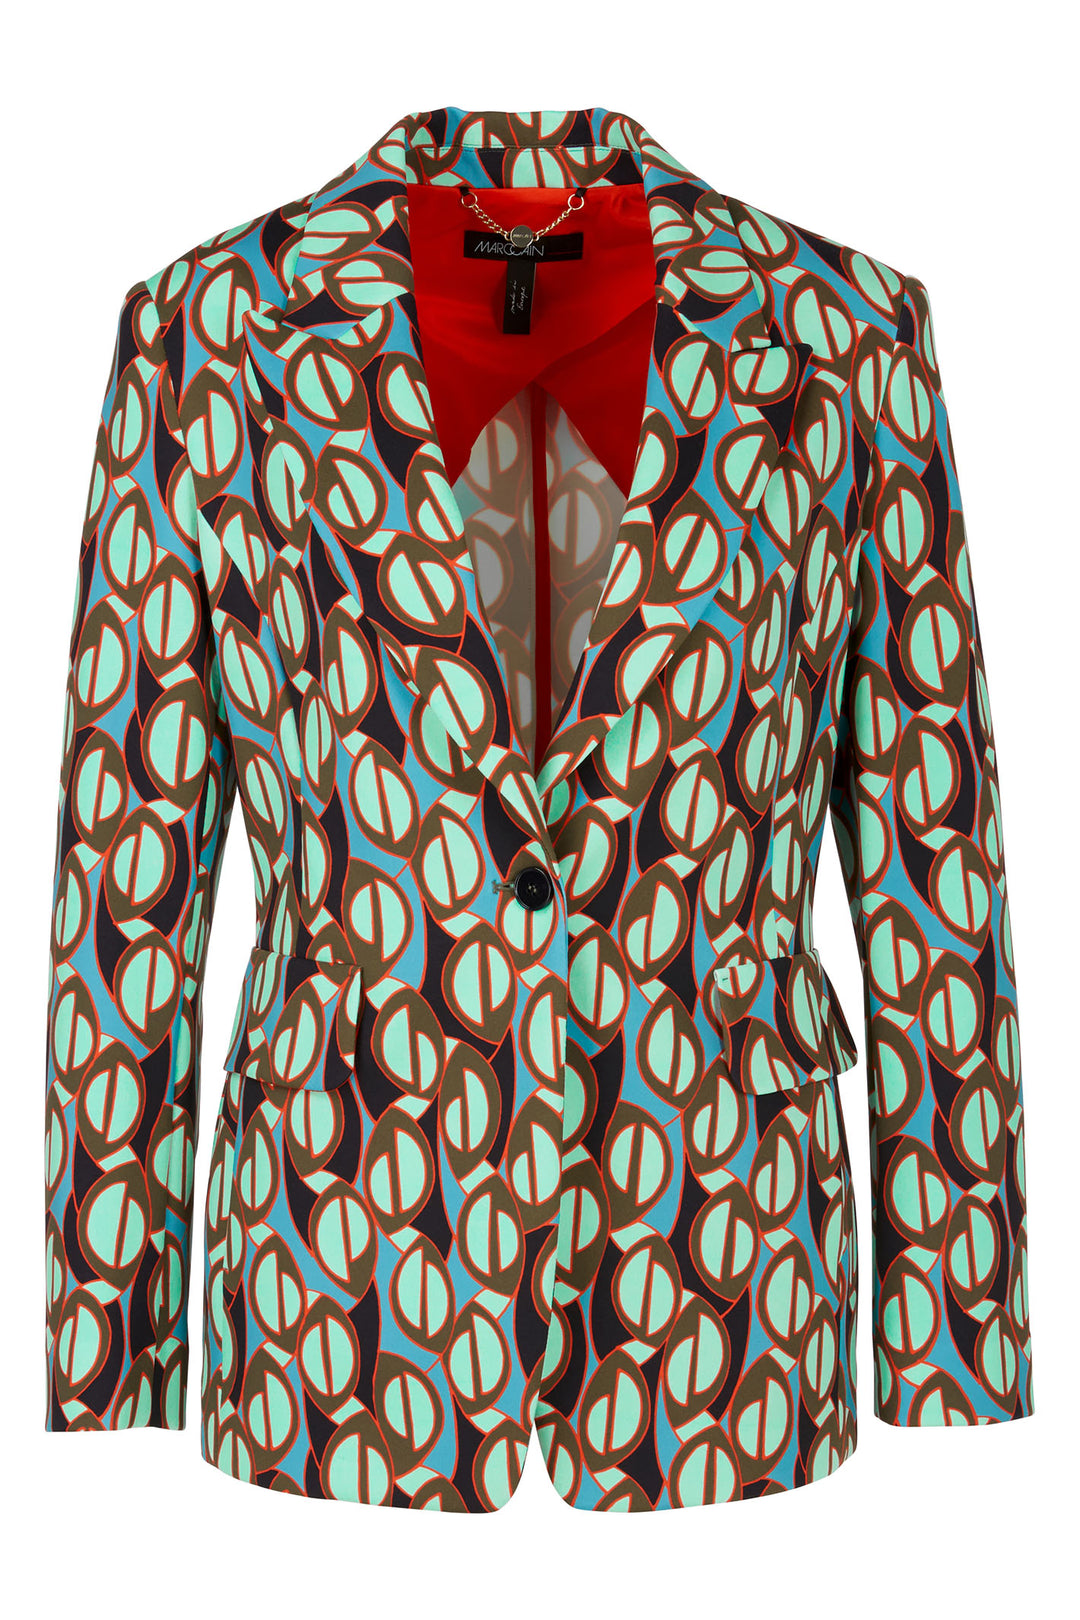 Marc Cain Collection WC 34.05 J01 562 Soft Malachite Green Blazer Jacket - Olivia Grace Fashion